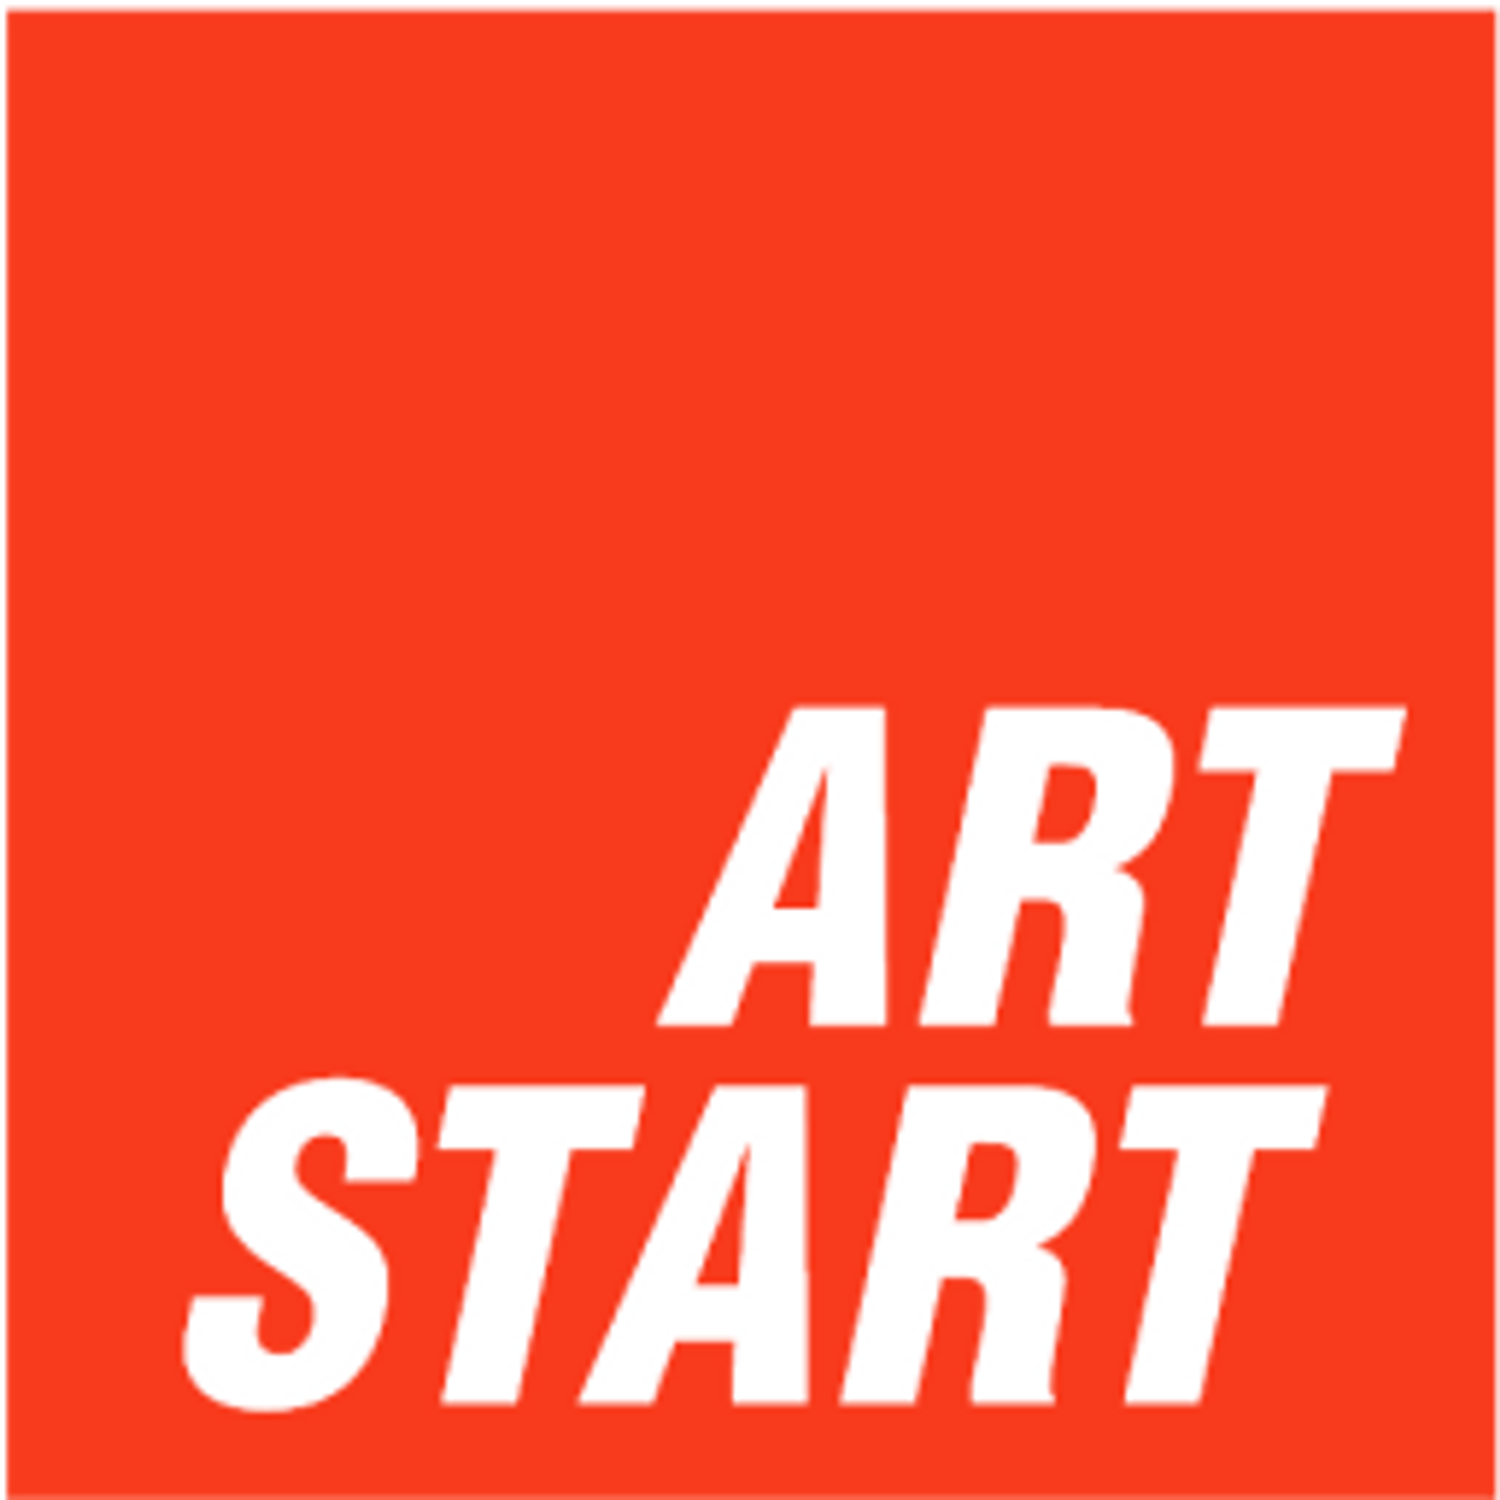 Art Start